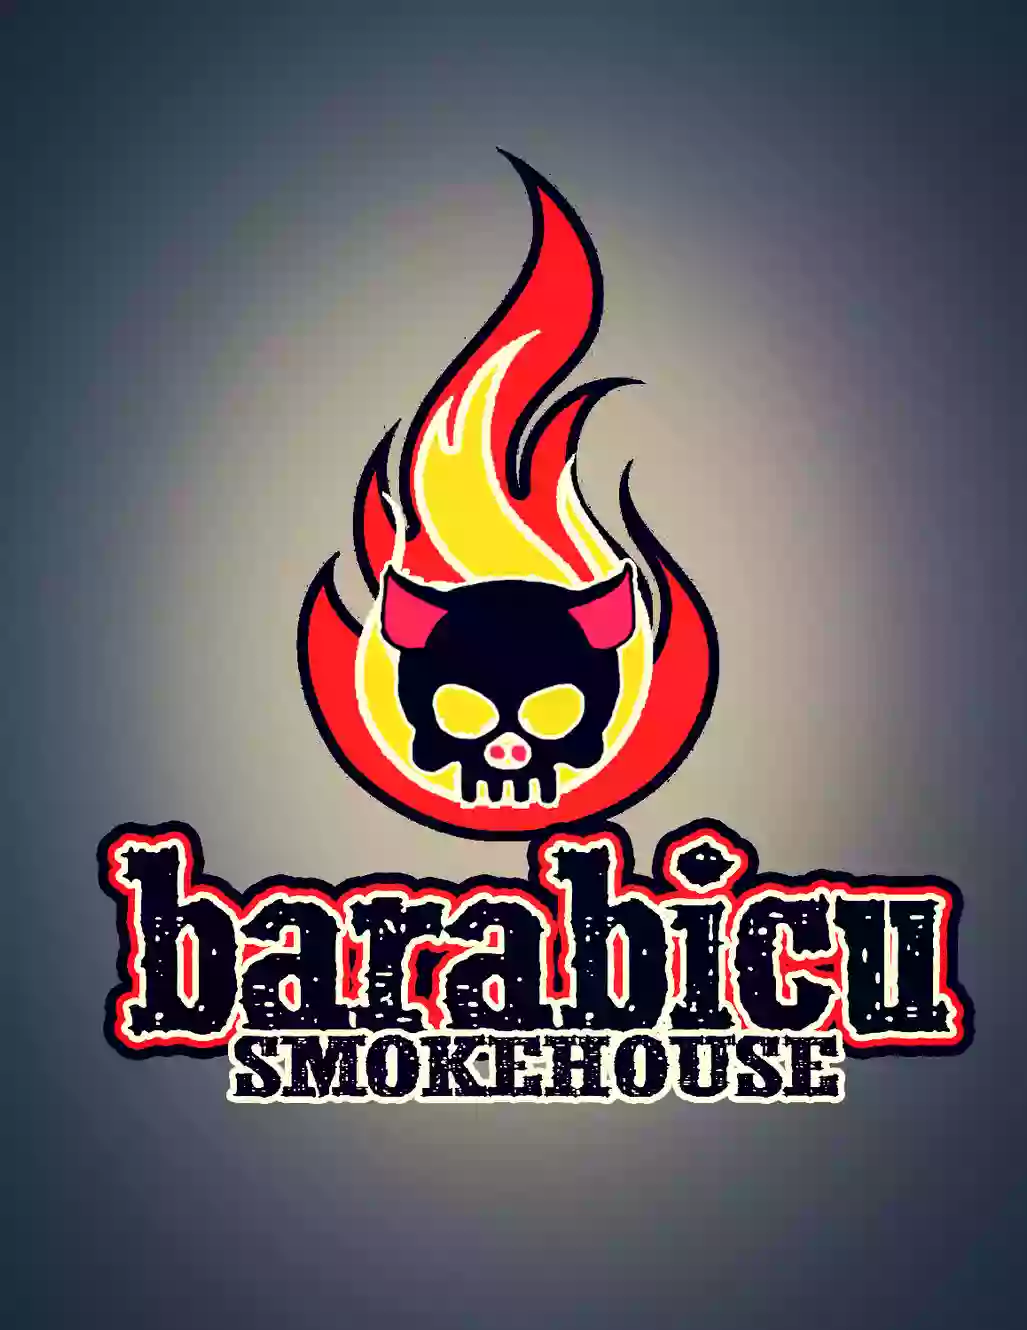 Barabicu Smokehouse